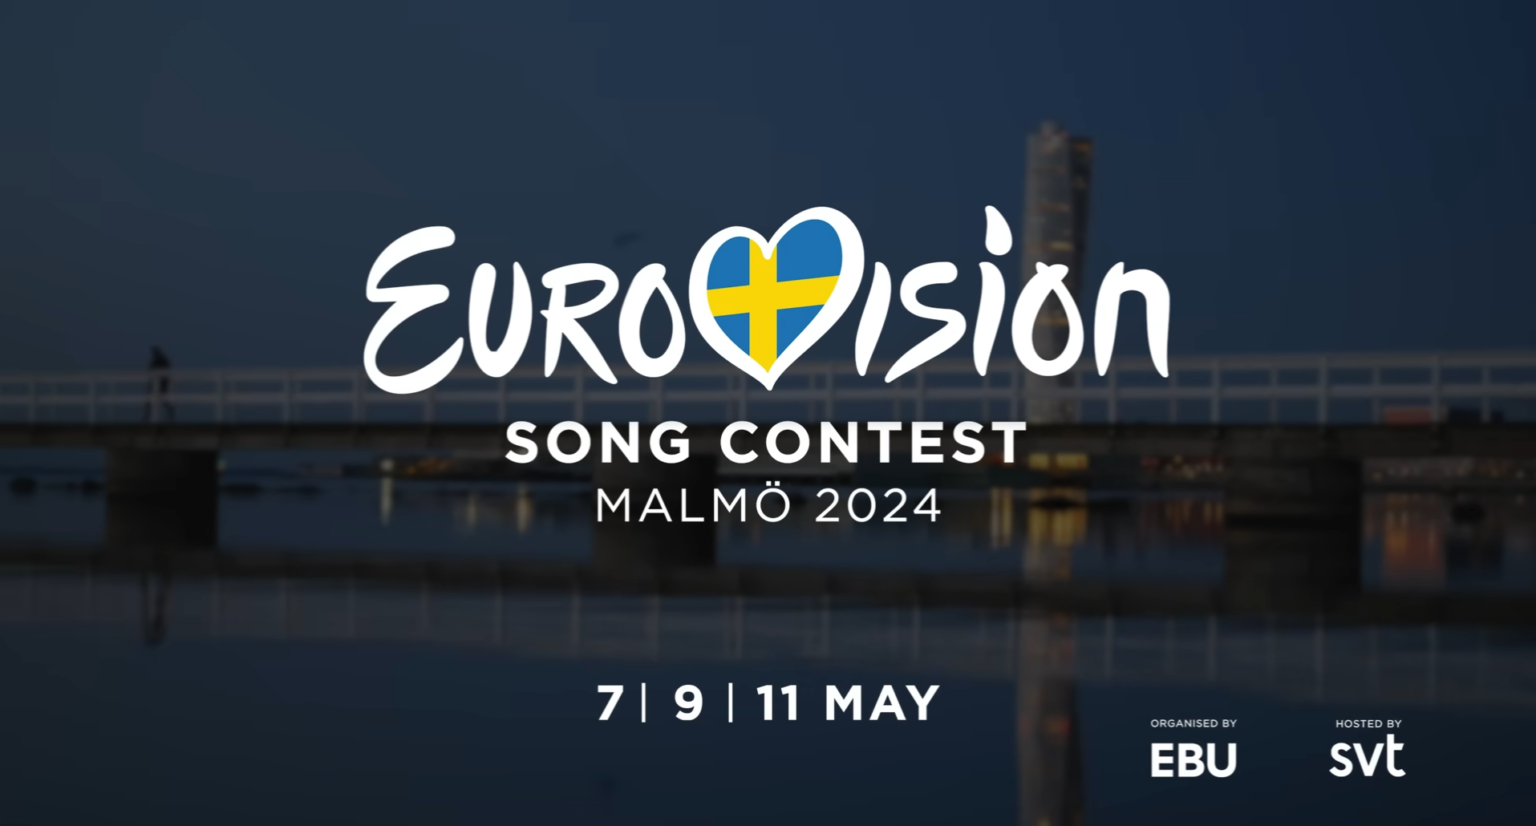 Malmö kalder Eurovision 2024 afholdes i Malmö Arena 711. maj